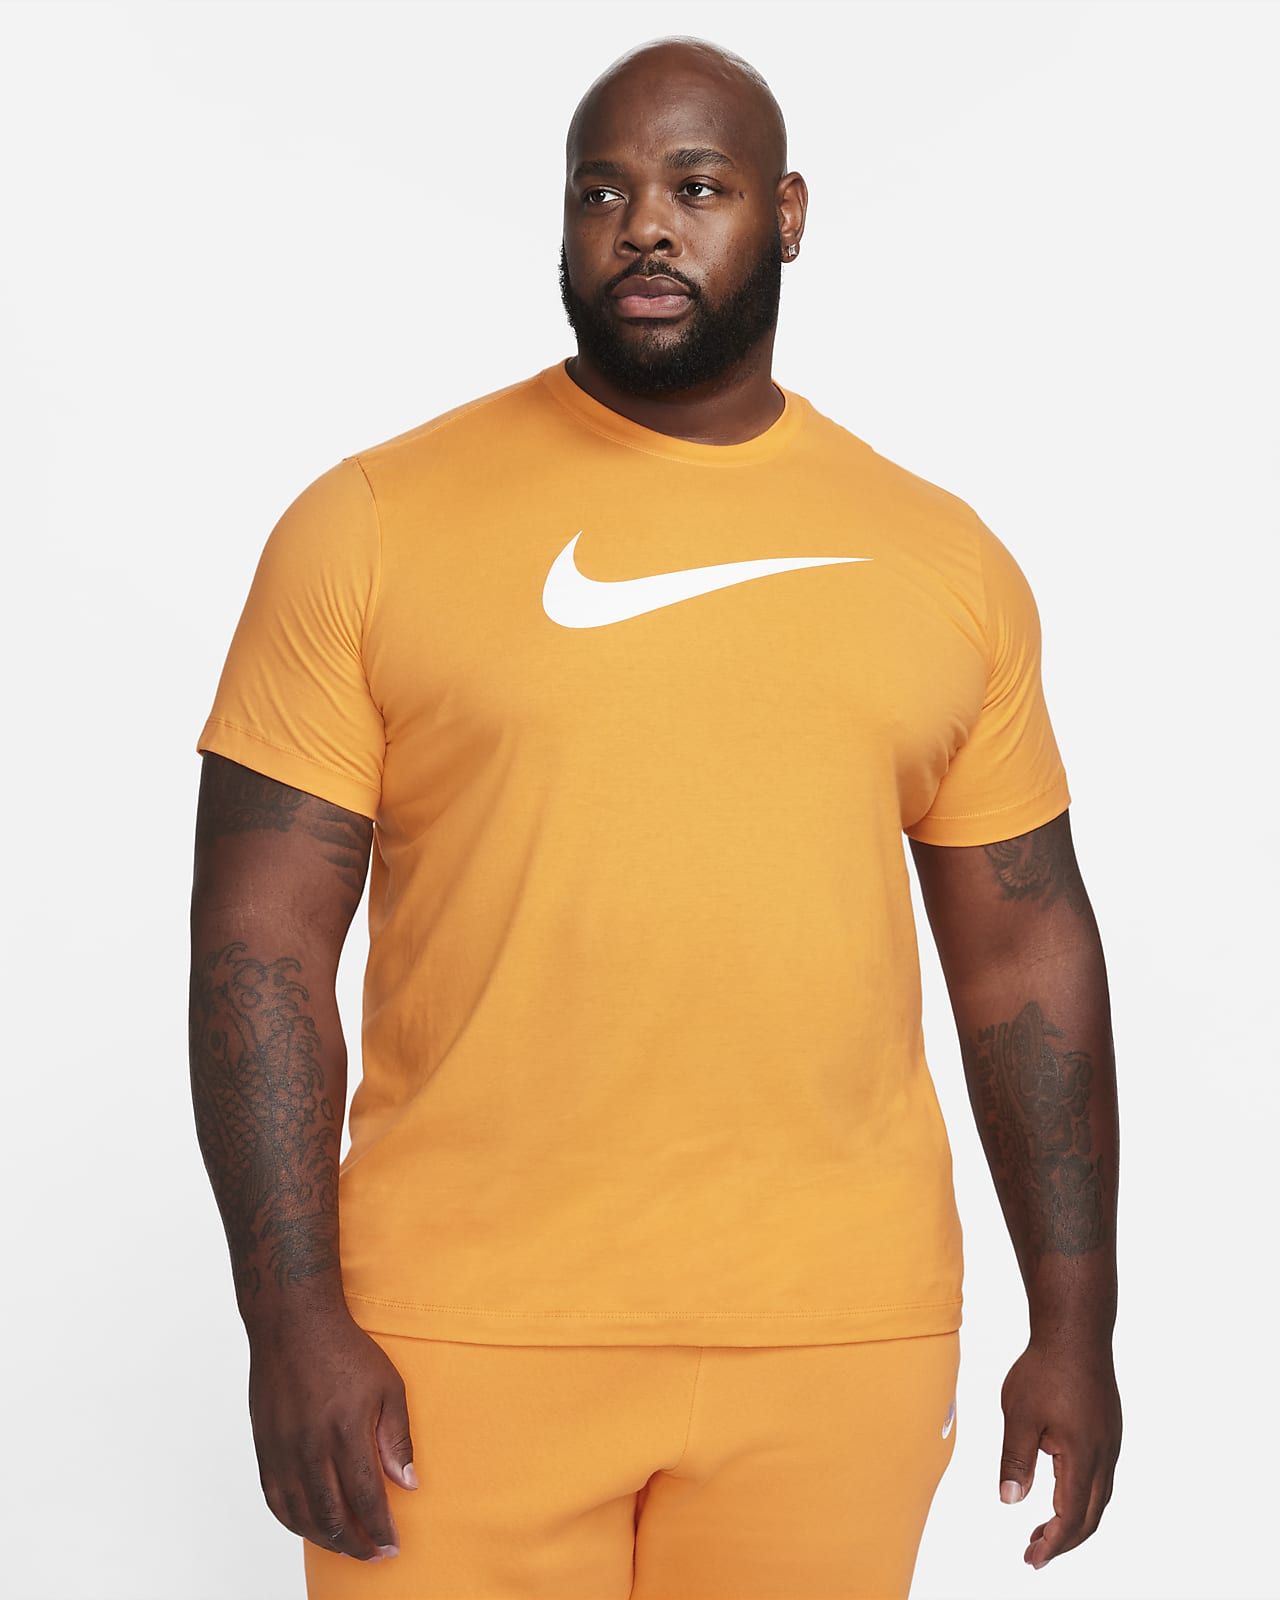 Nike Sportswear Mens T-Shirt, Crew Neck Shirts for Men with Swoosh